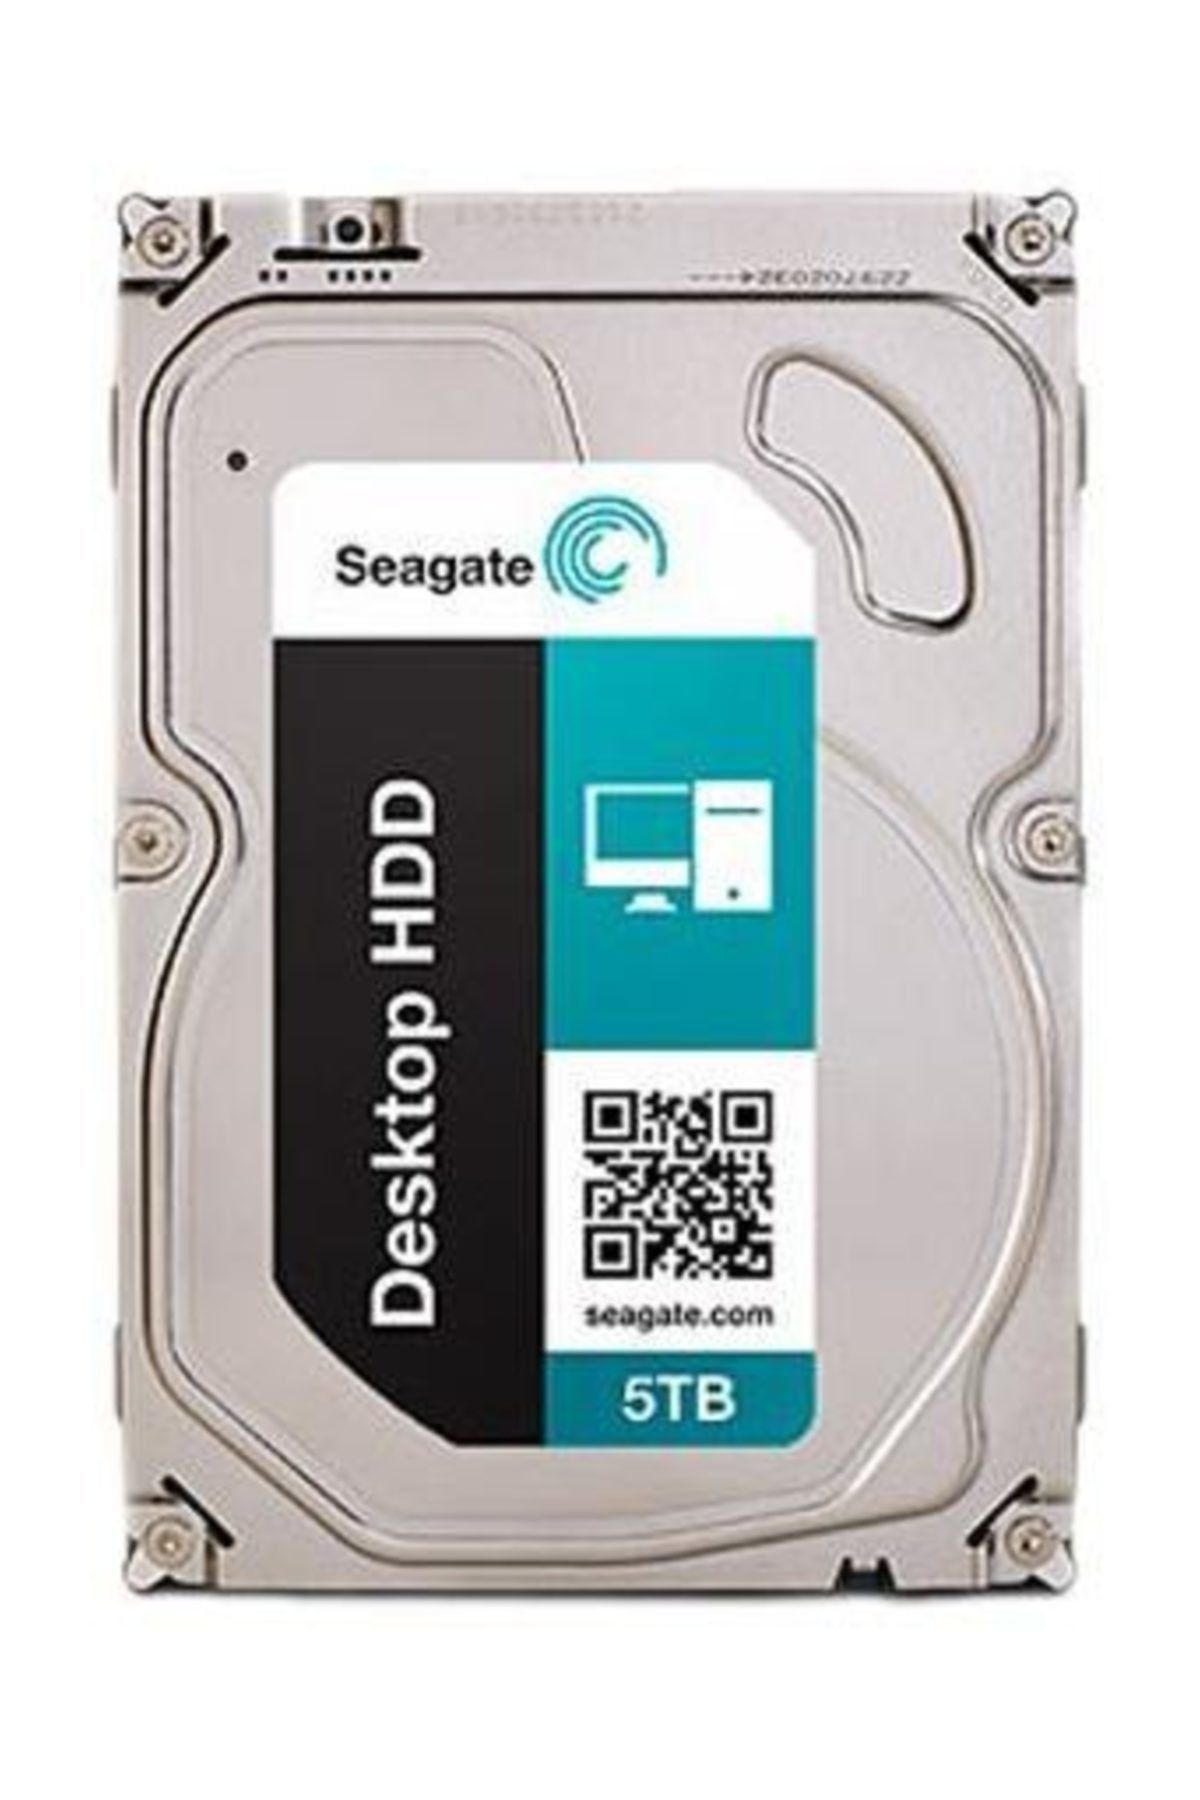 Seagate ST5000DM000 3.5" 5 TB 5900 RPM 128 MB SATA 3 HDD